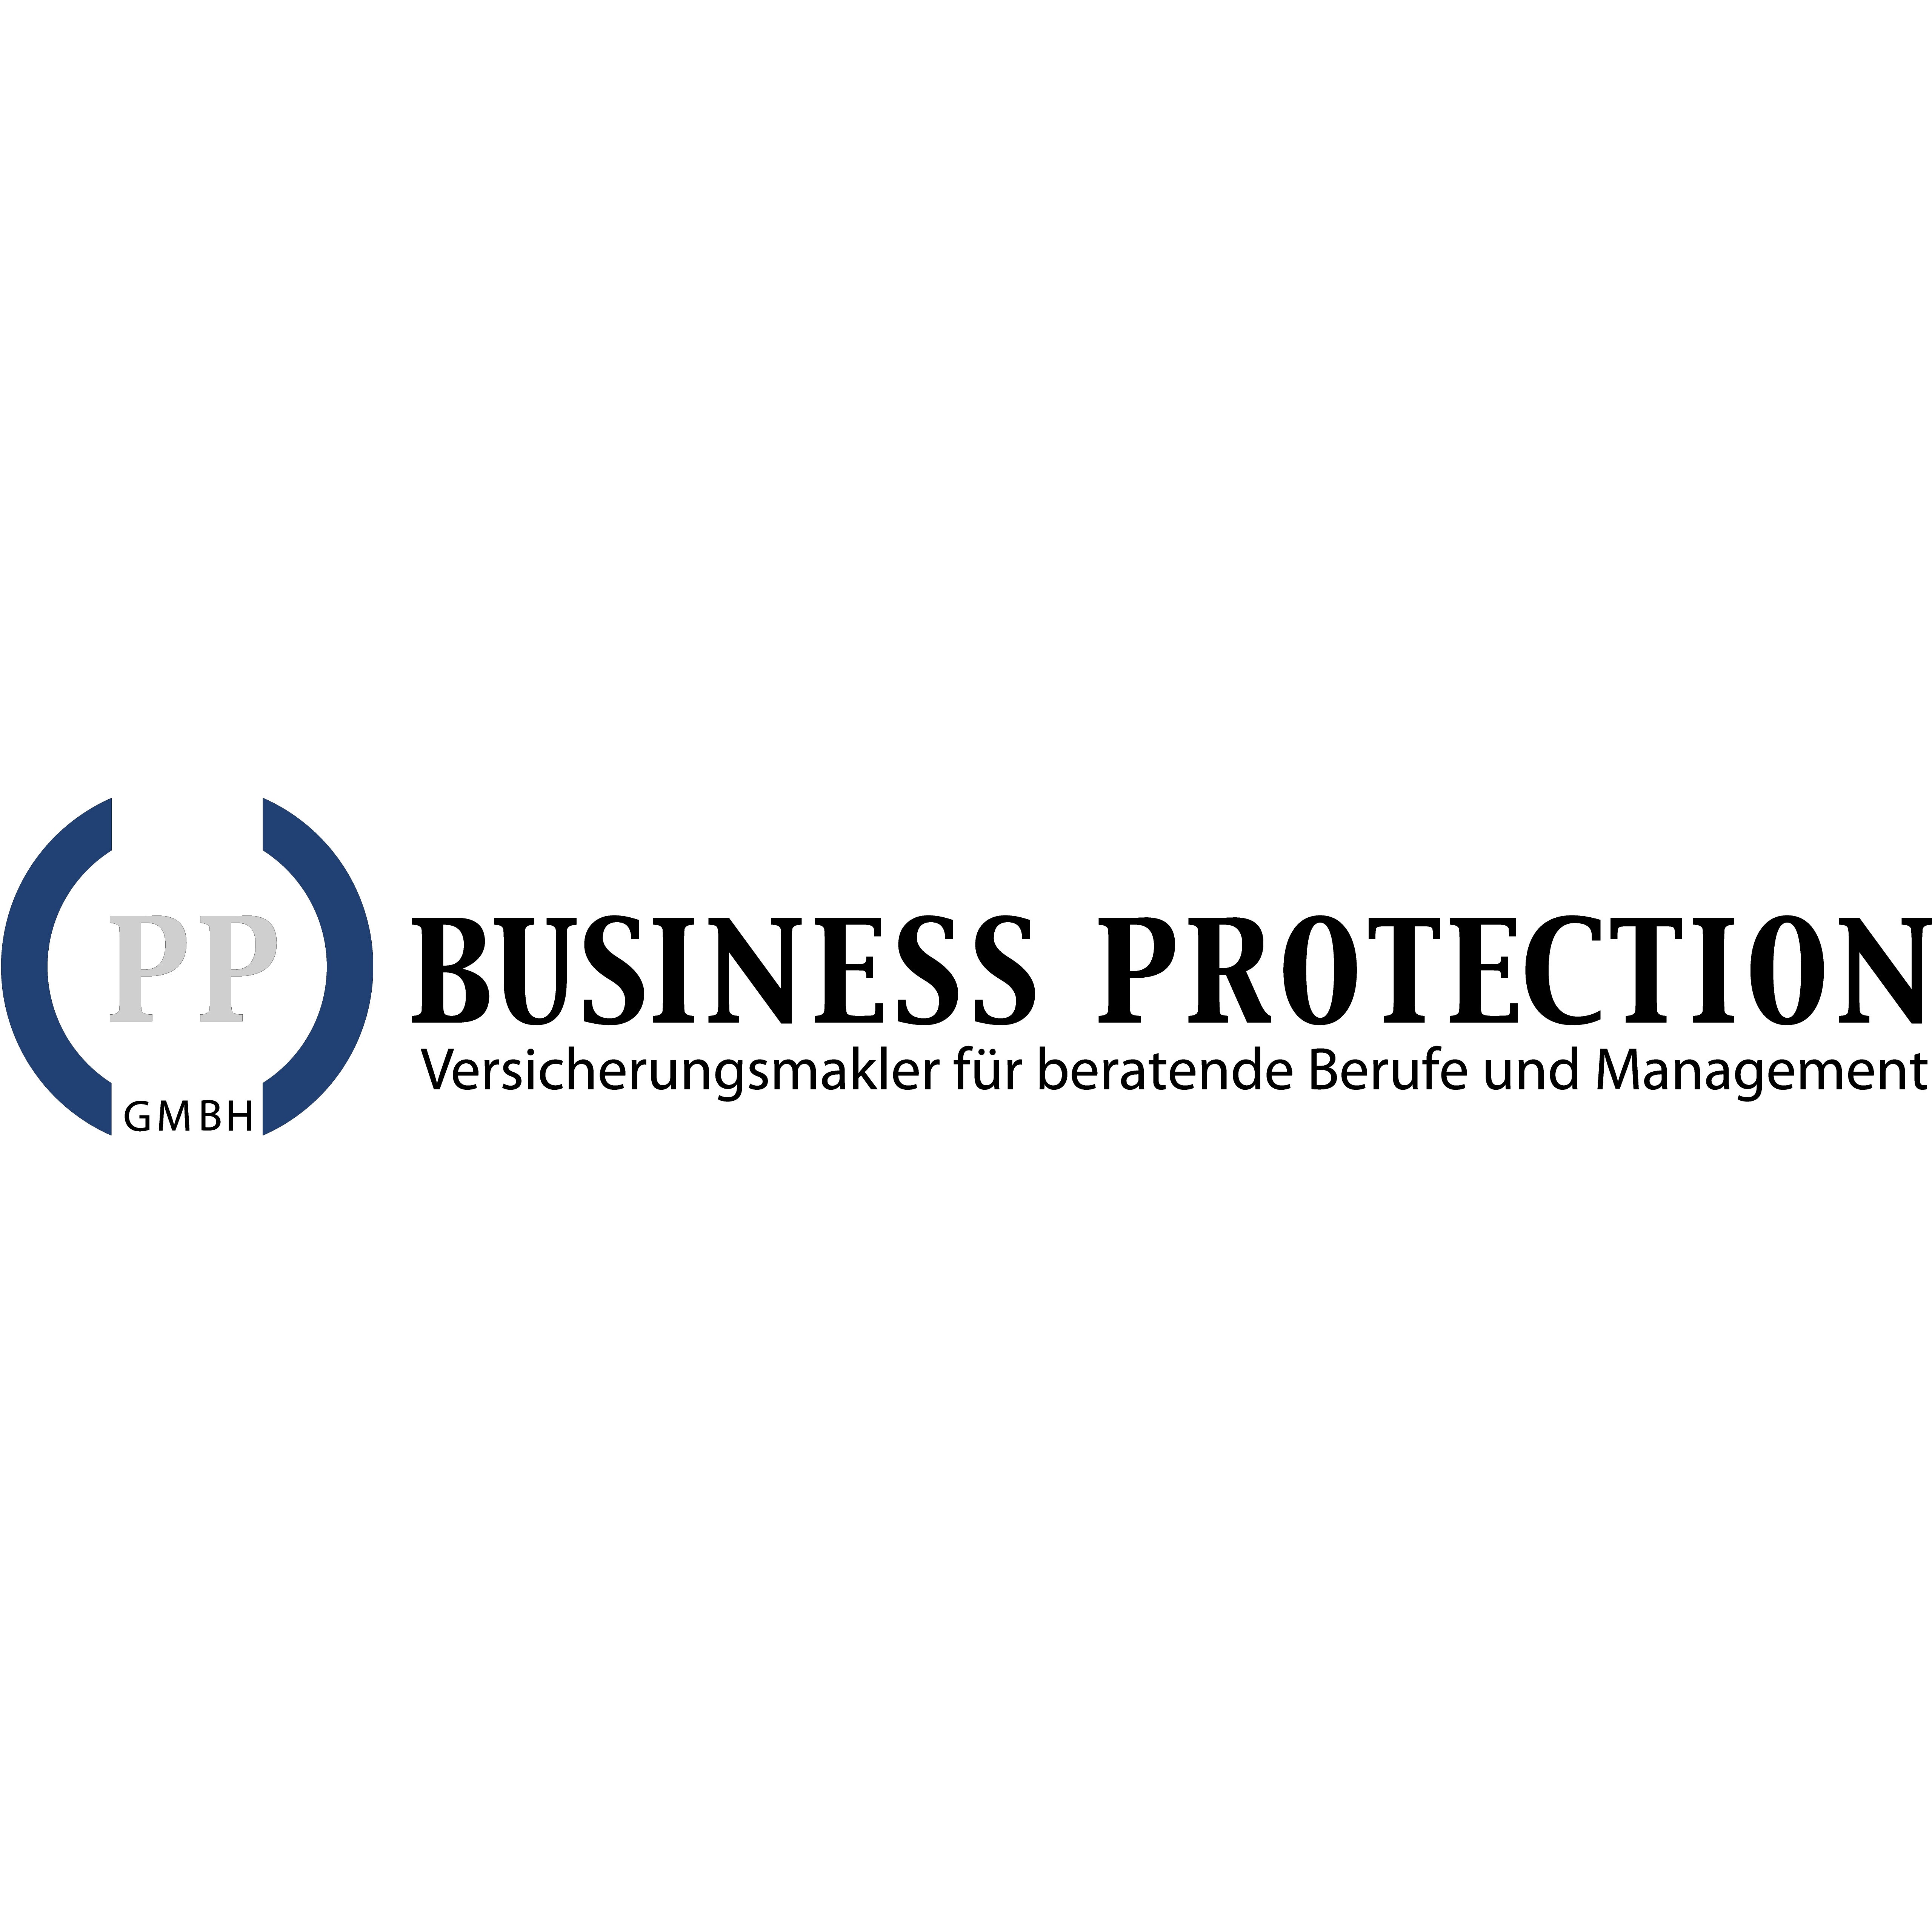 PP Business Protection GmbH in Hamburg - Logo